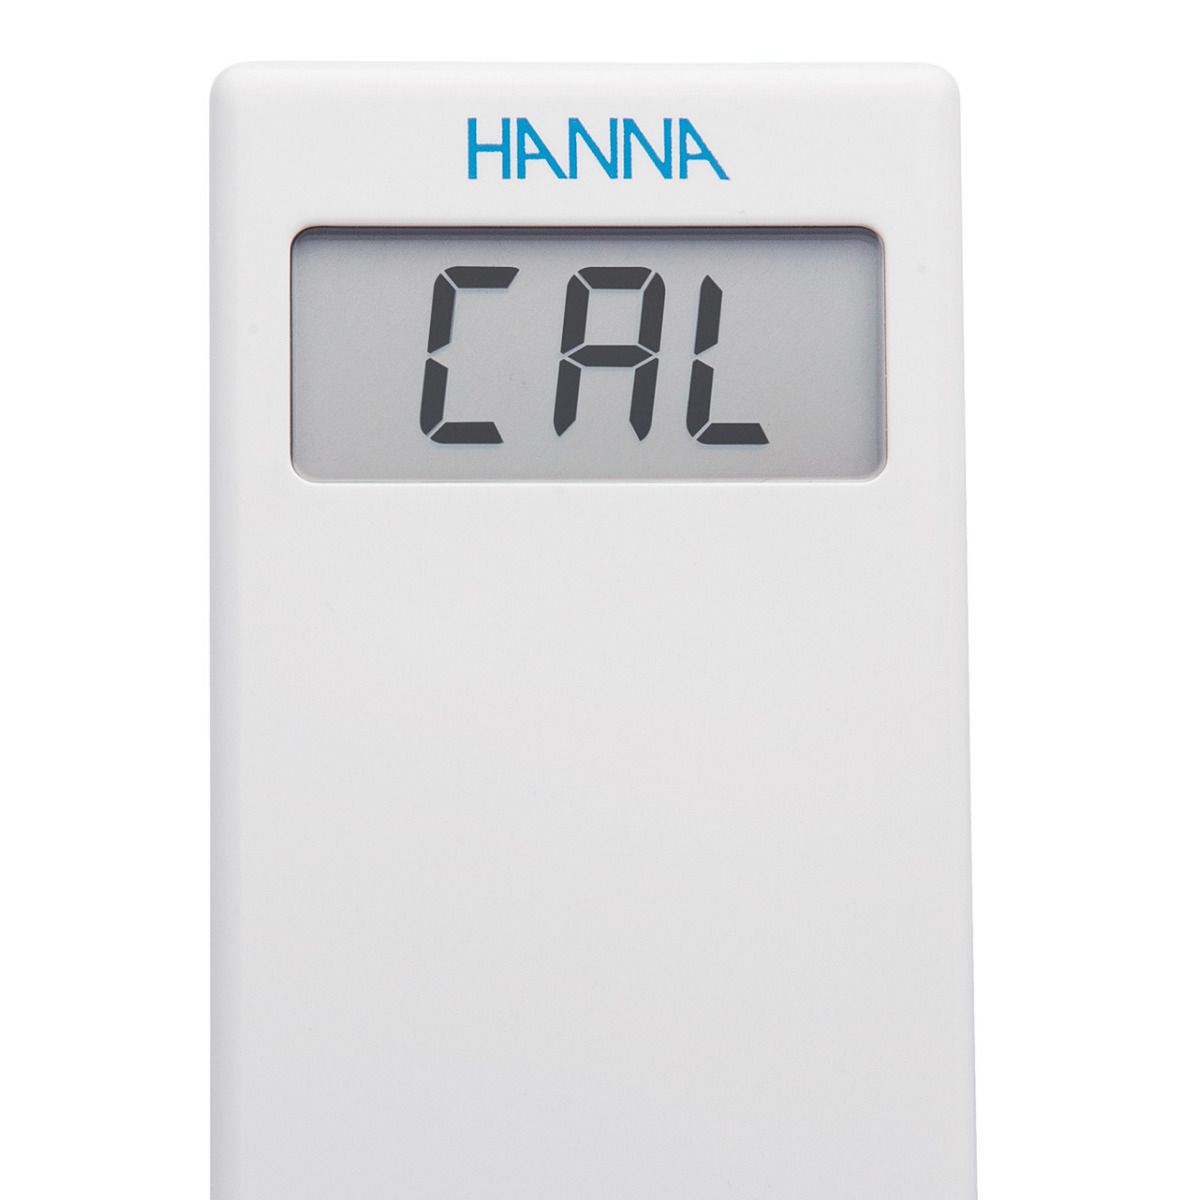 Checktemp® 1 Digital Thermometer | HI98509 - 0